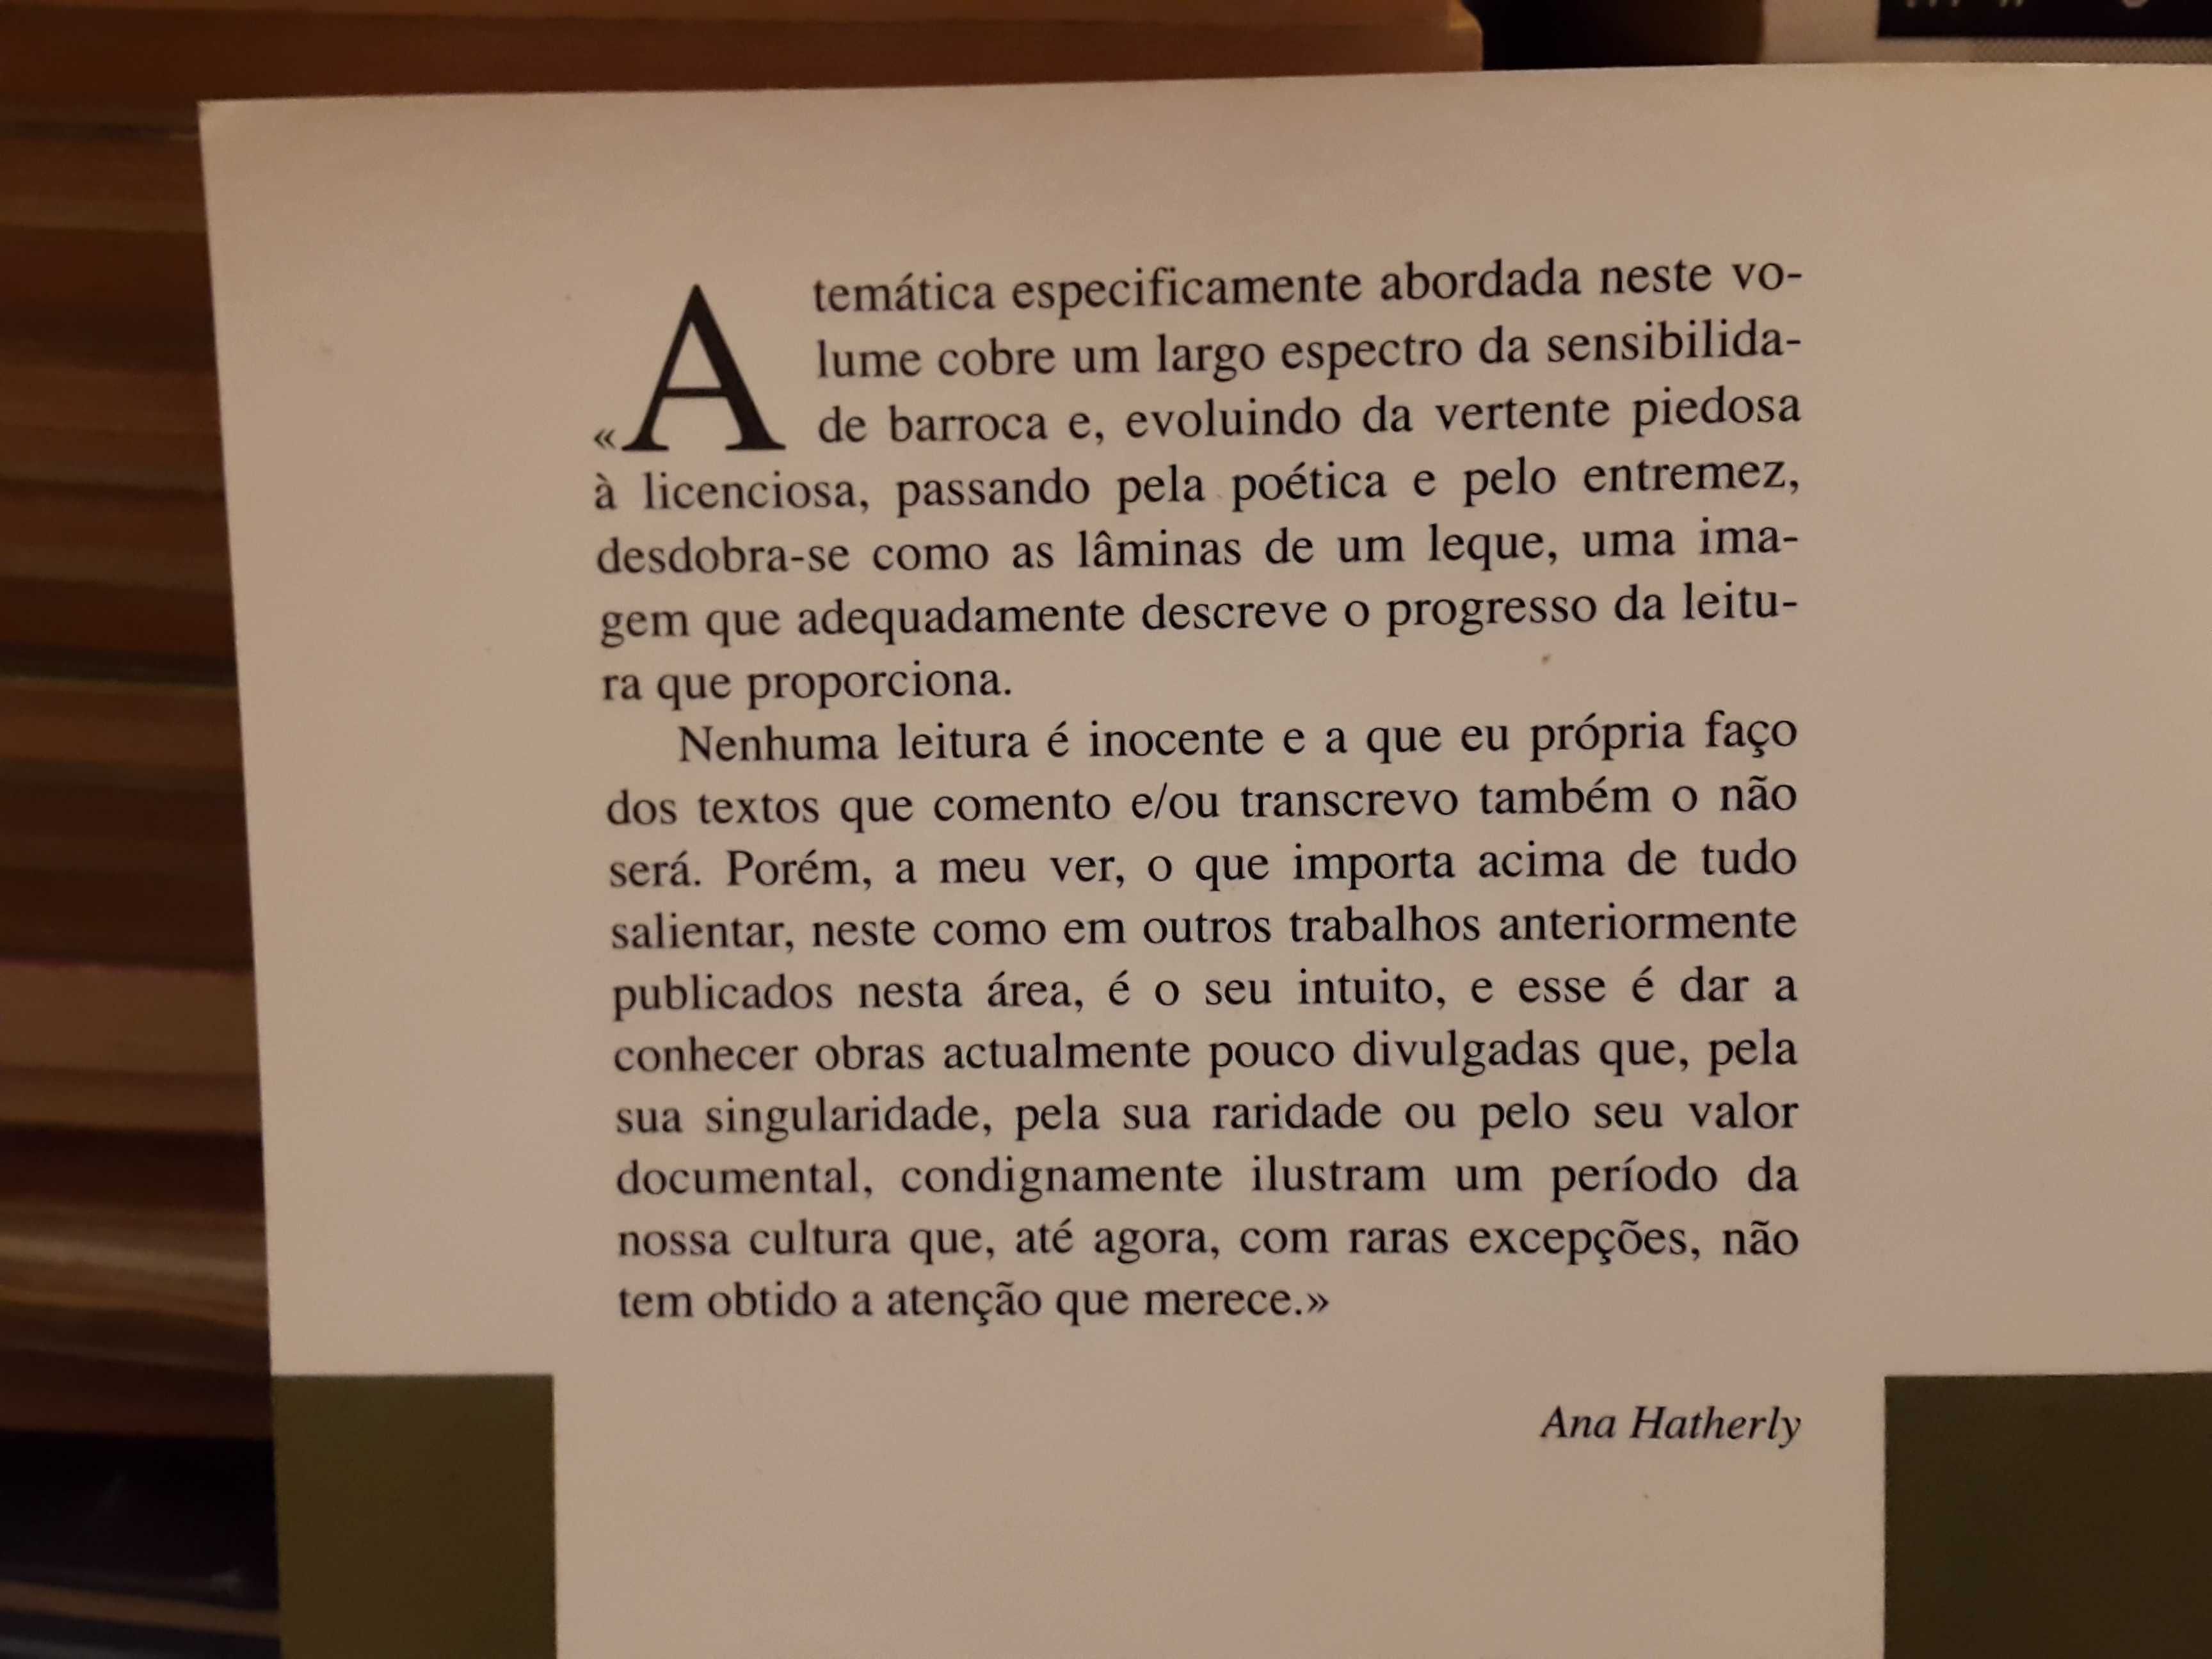 Ana Hatherly - Poesia Incurável : aspectos da sensibilidade barroca